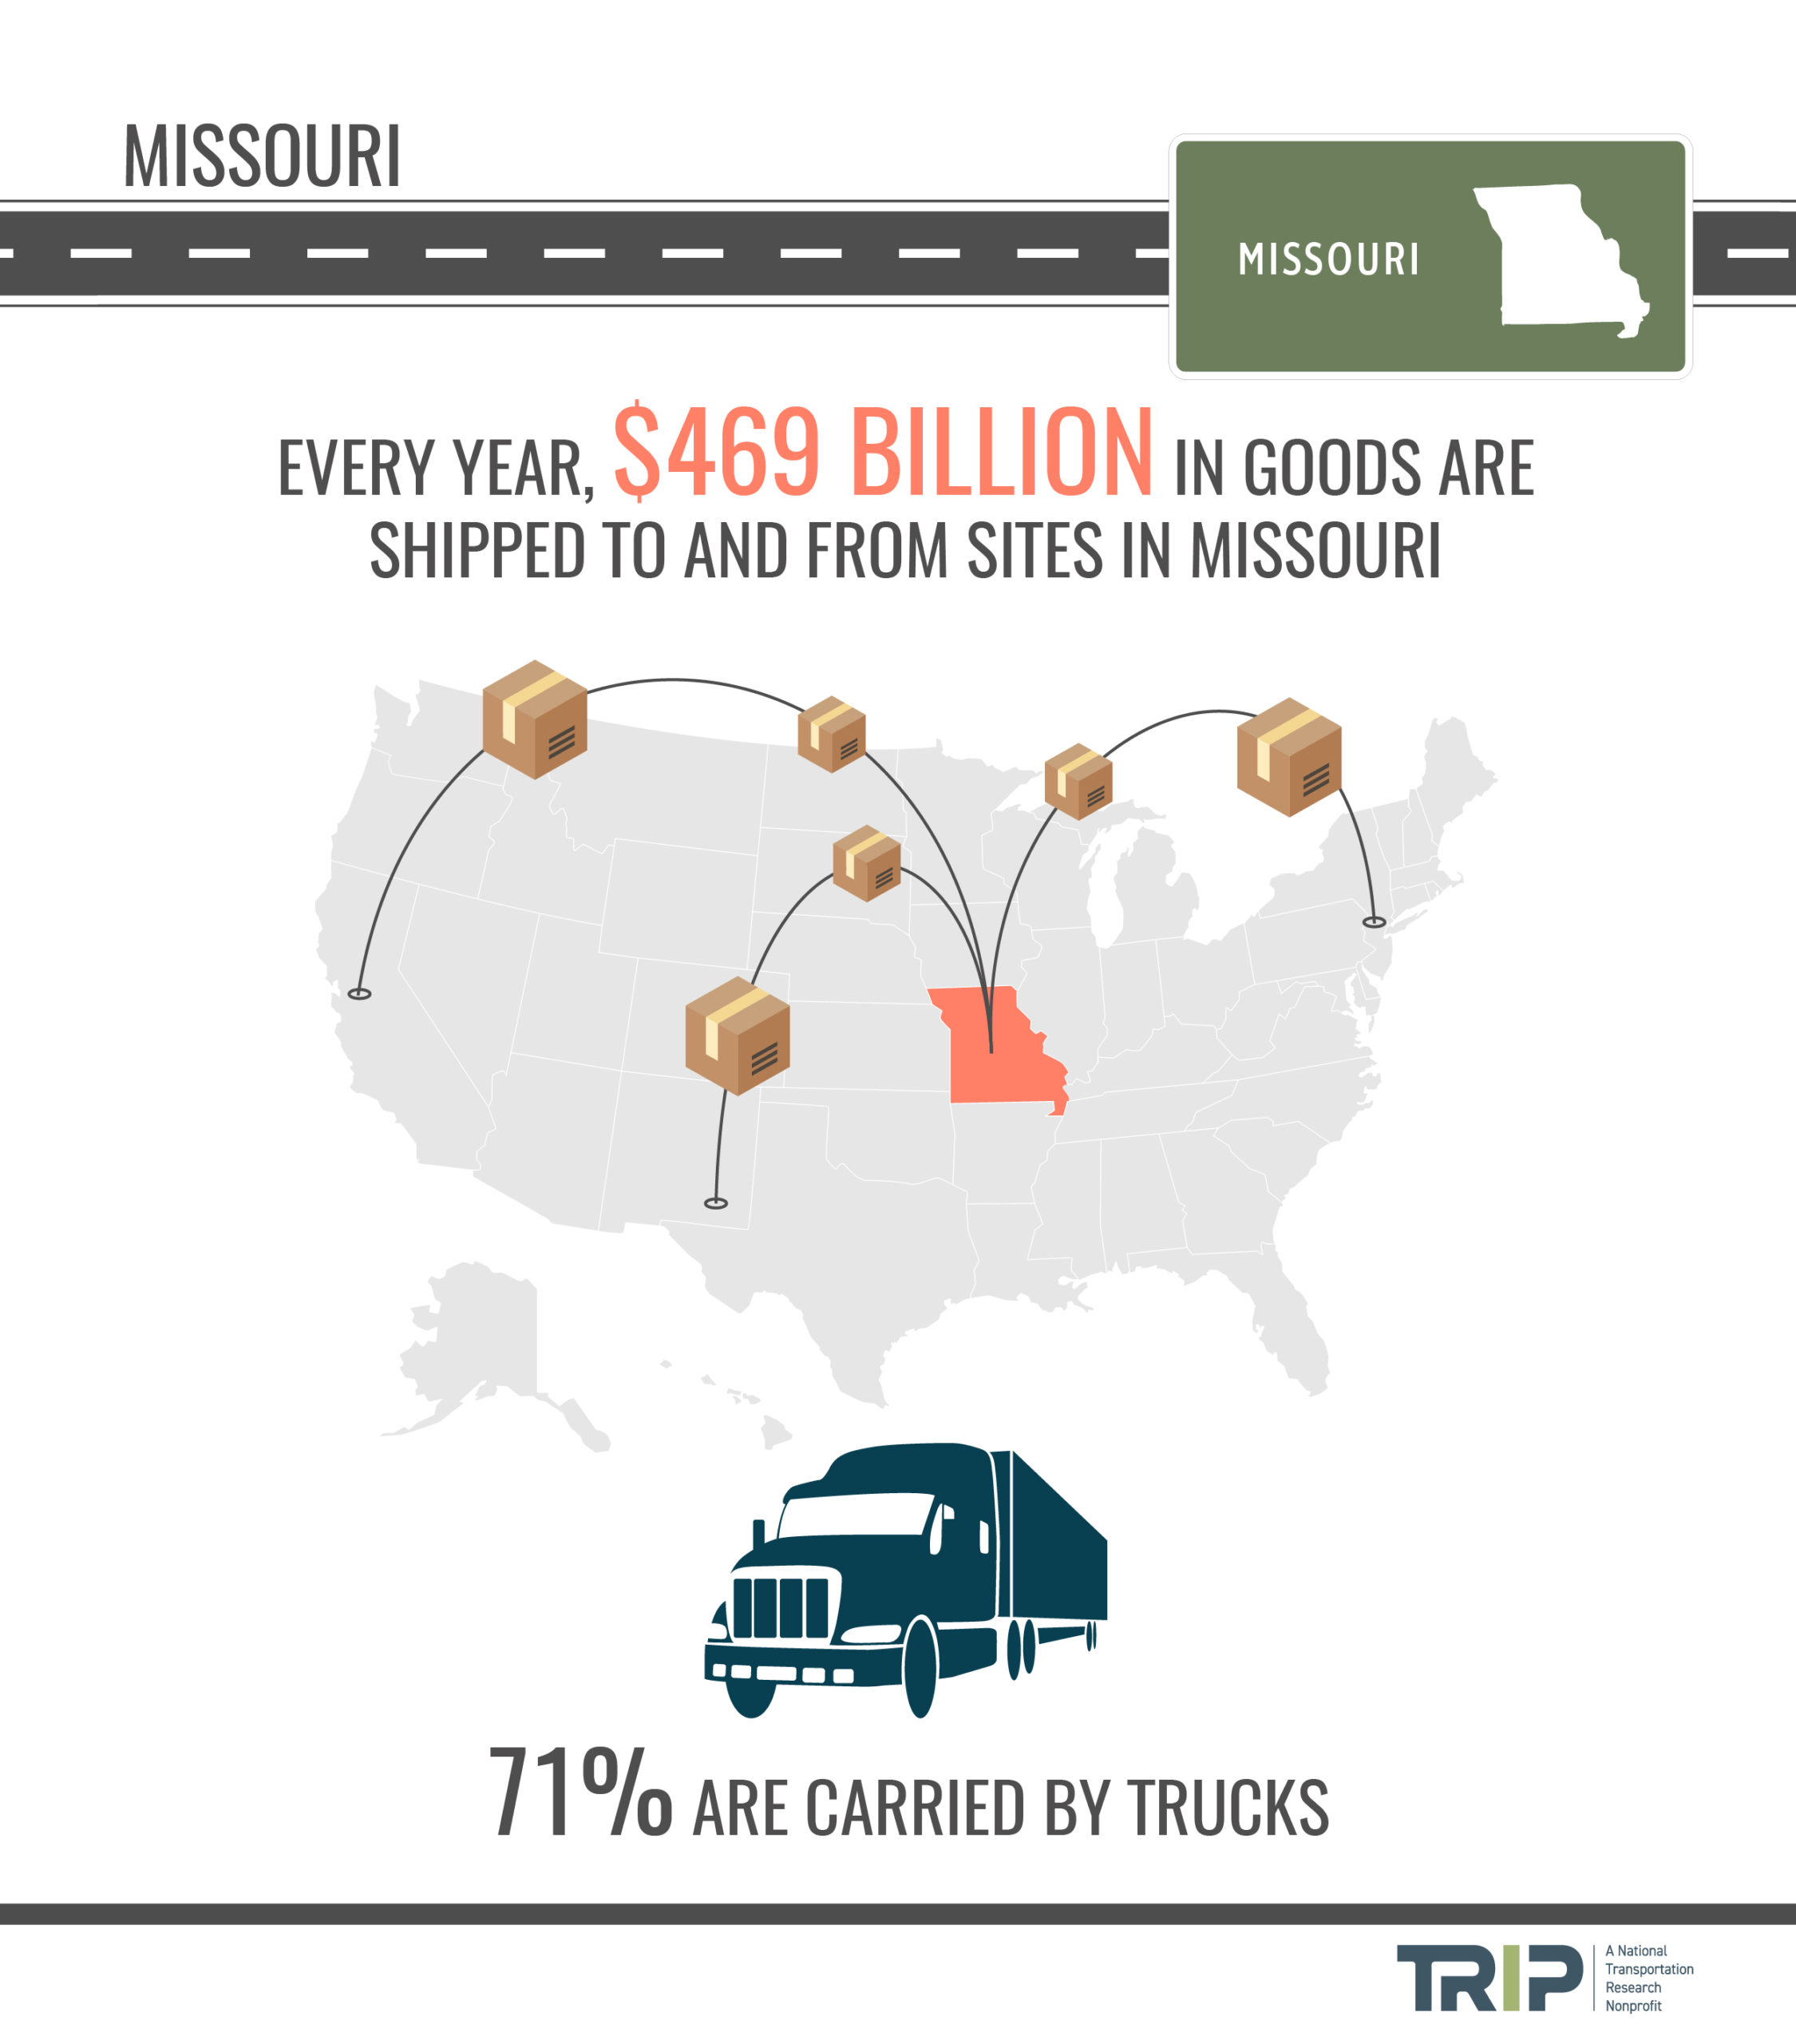 Missouri Goods Shipped Infographic – December 2020